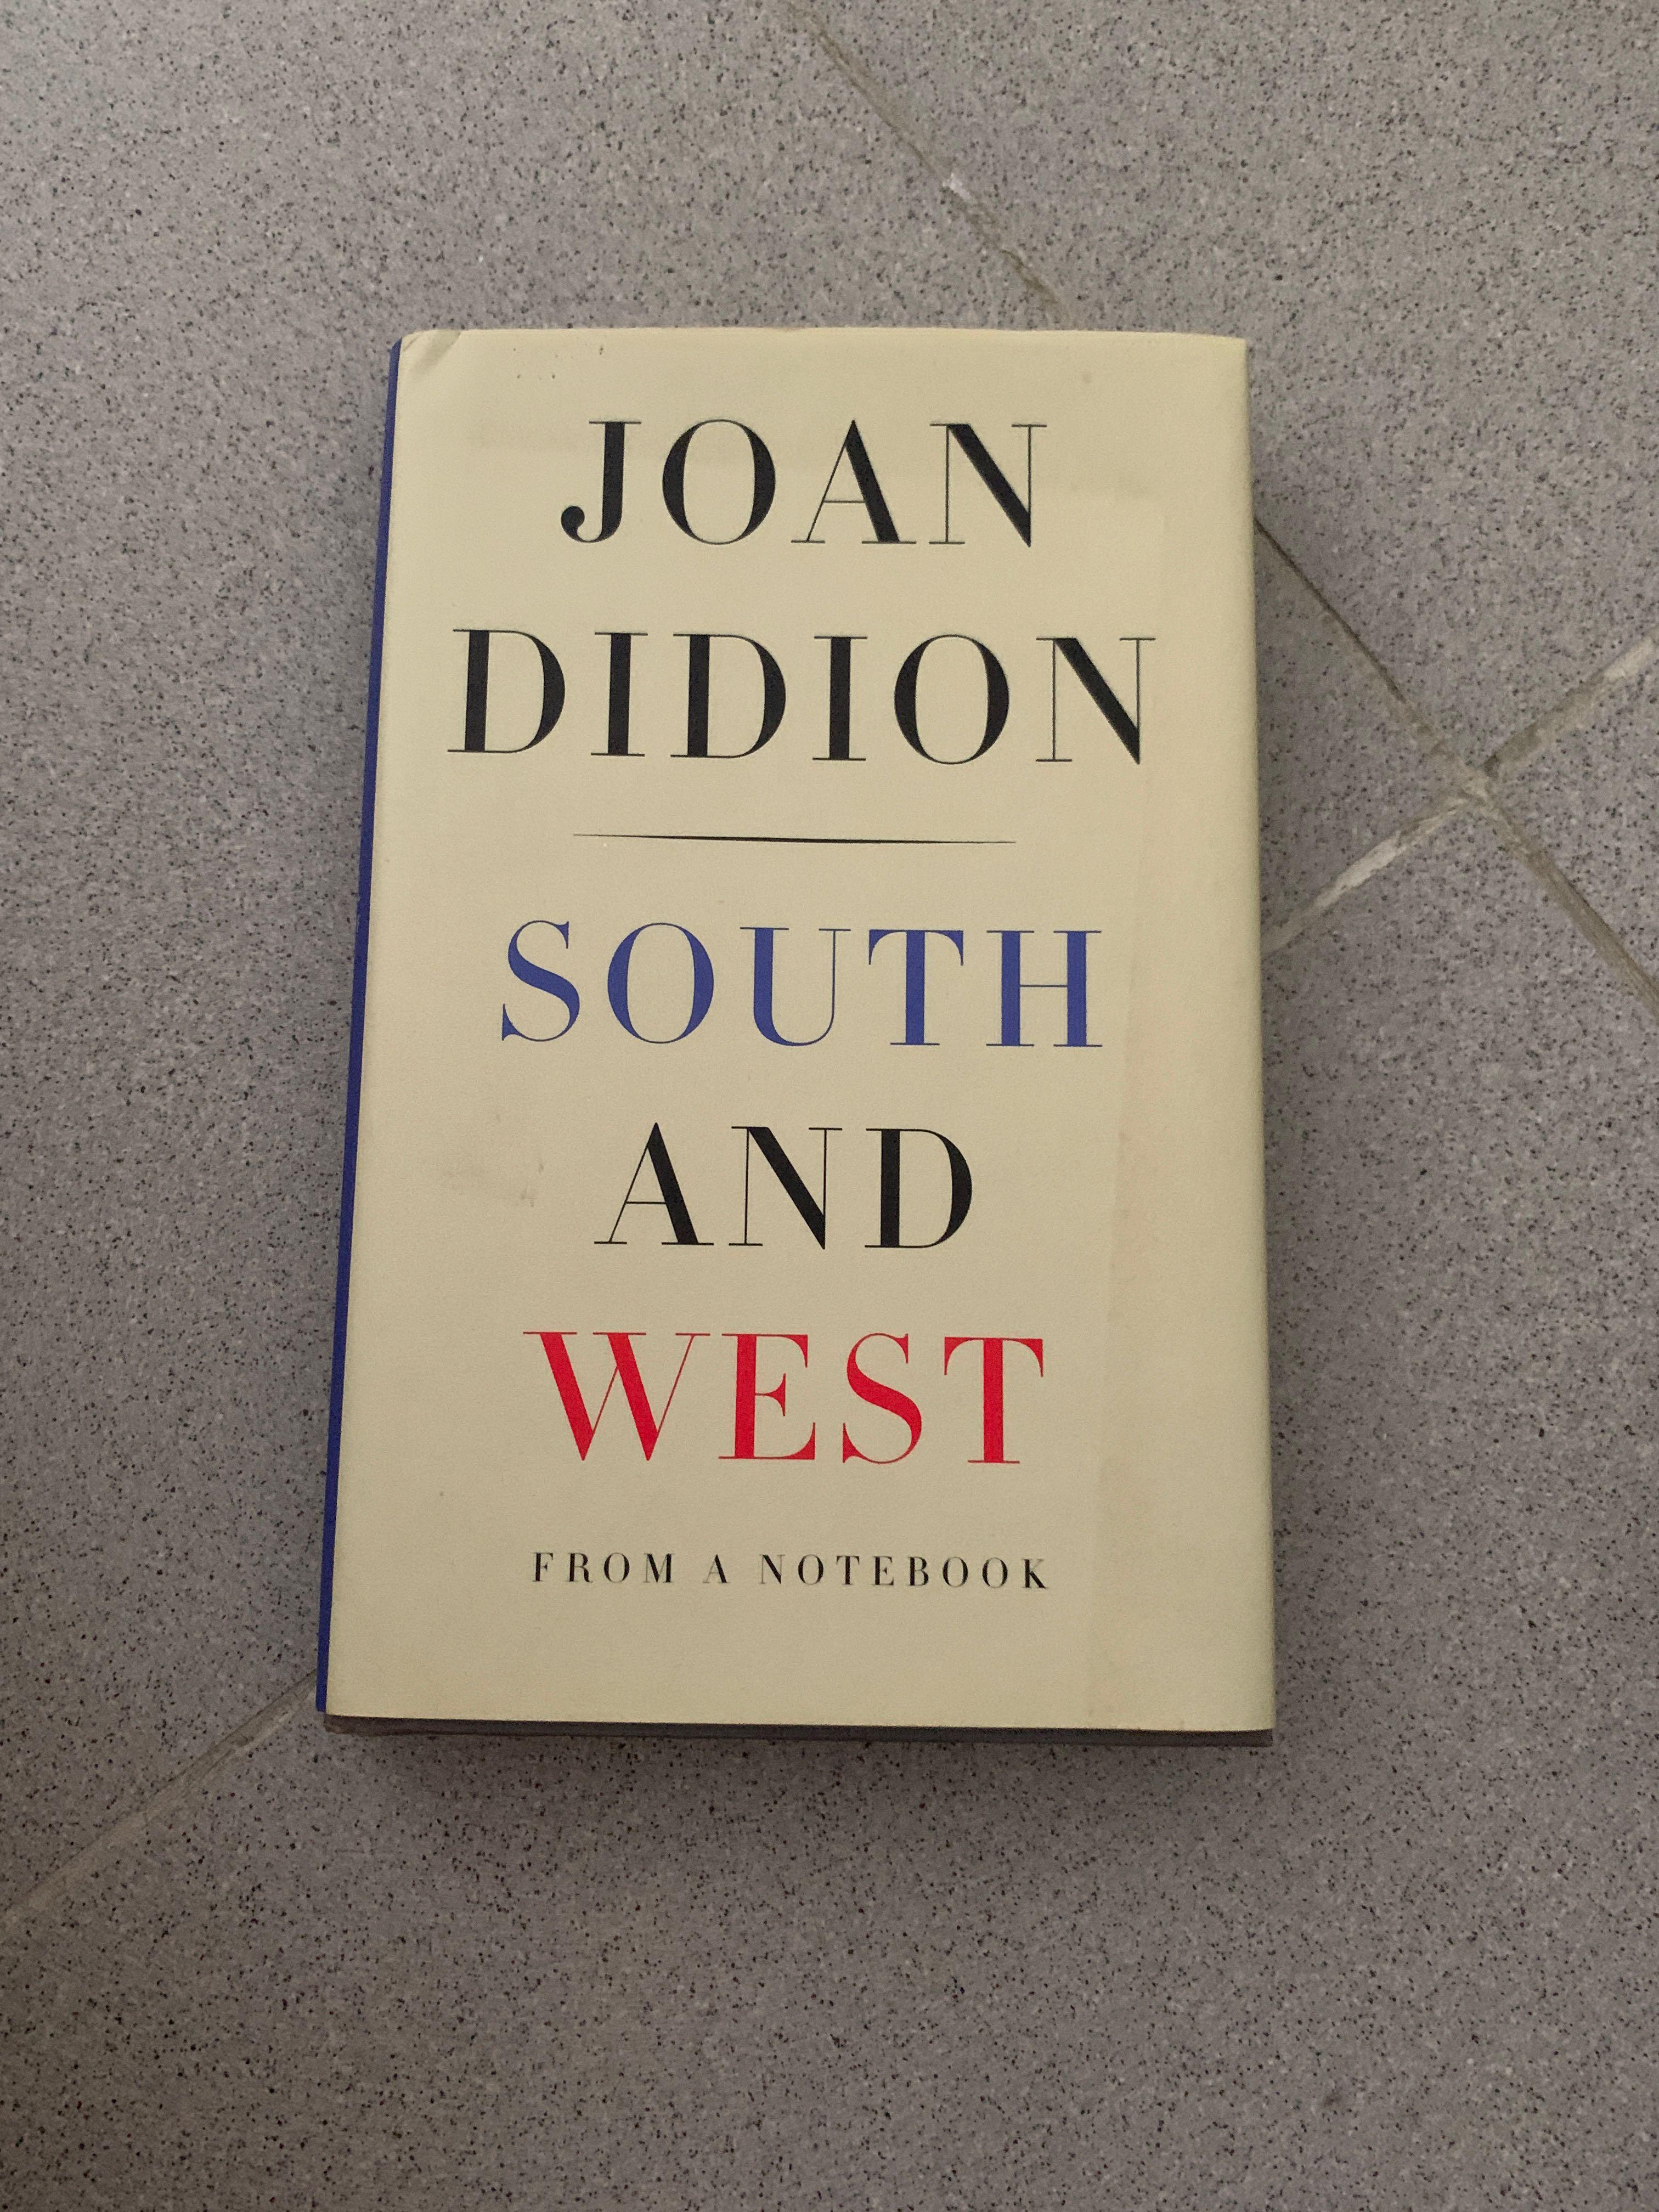 joan didion notebook